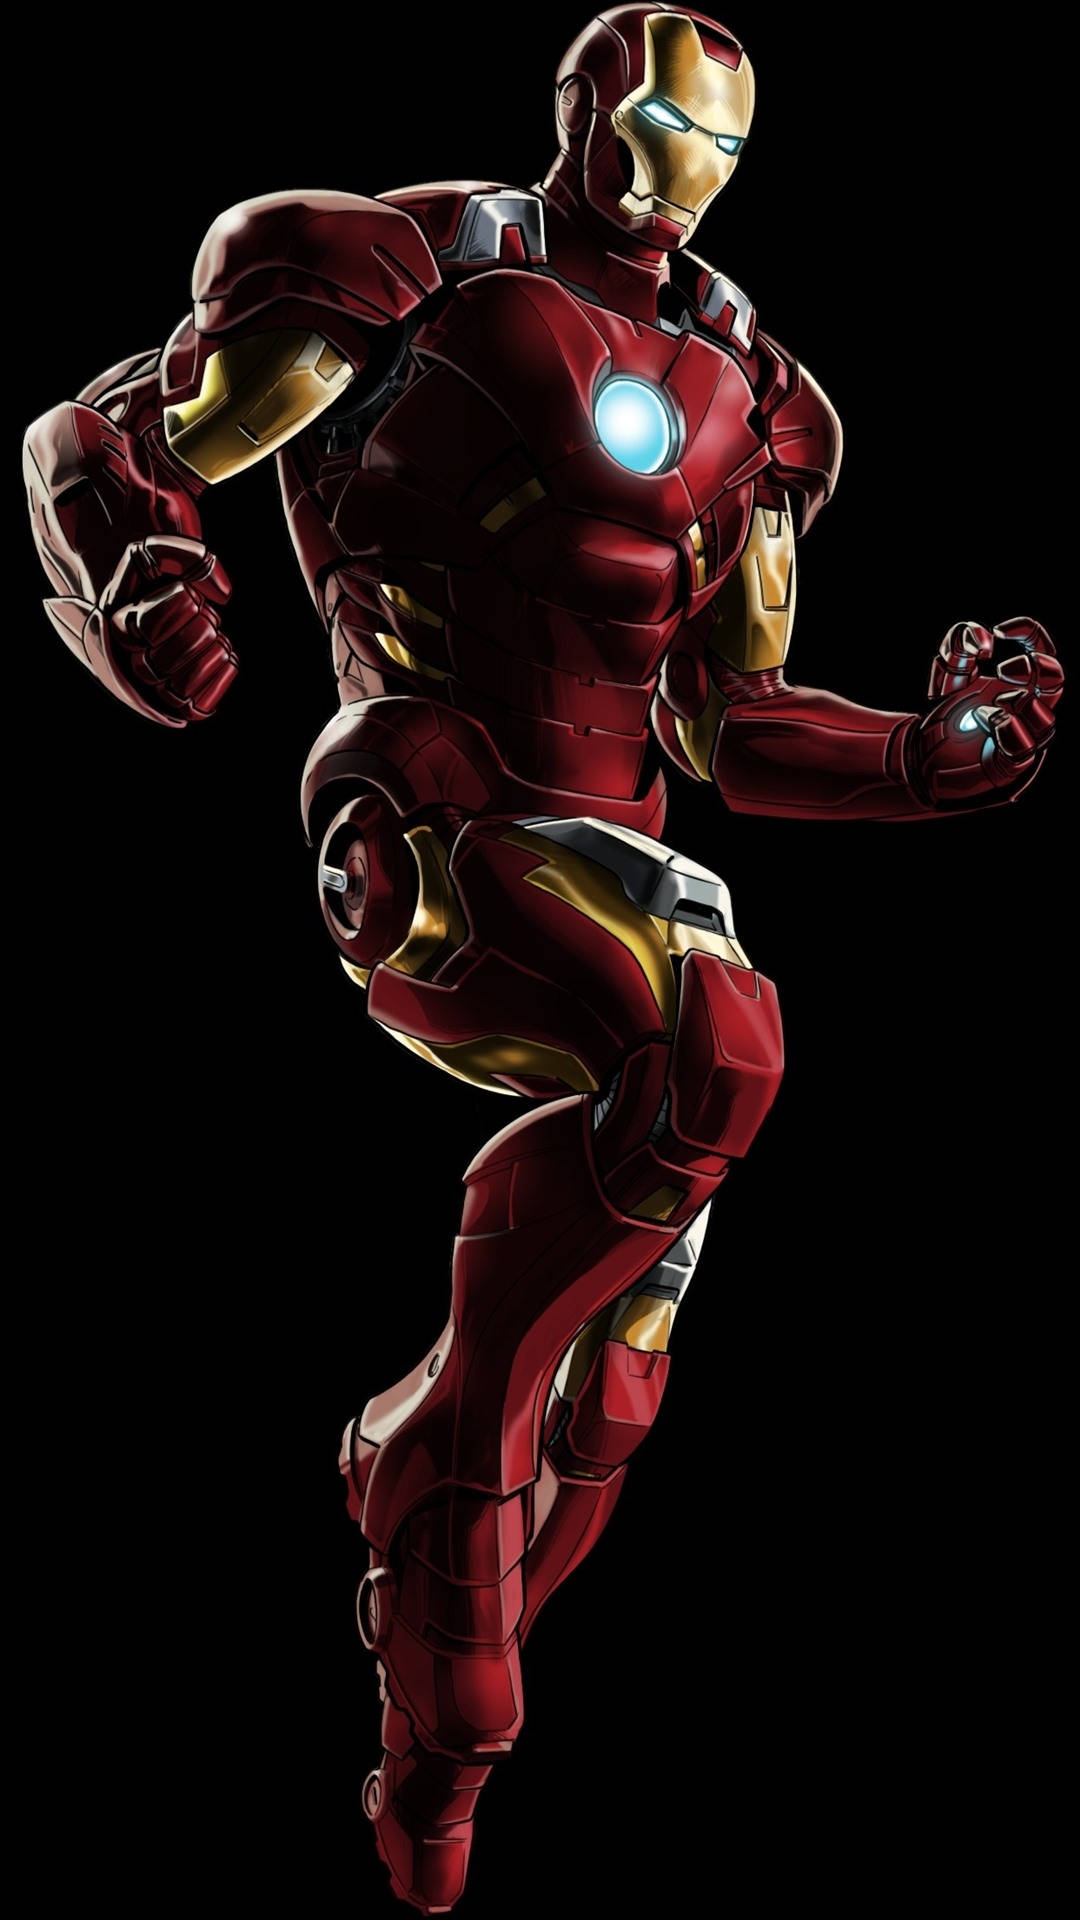 Fondode Pantalla Hd Negro De Iron Man, El Superhéroe. Fondo de pantalla